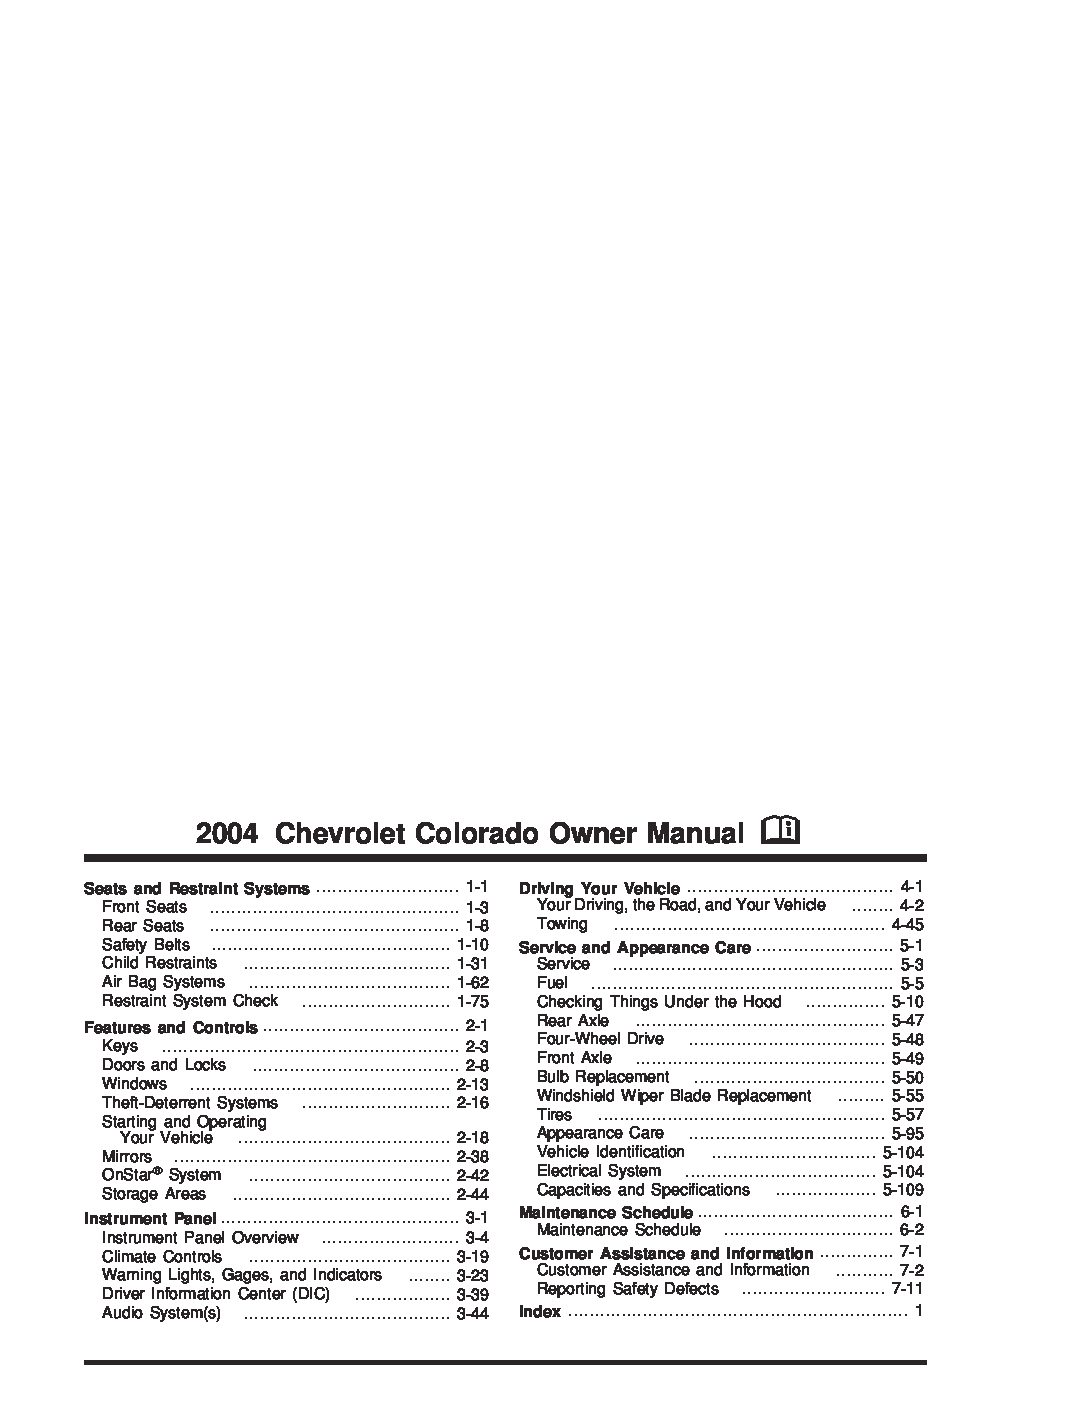 2004 Chevrolet Colorado Owner’s Manual Image